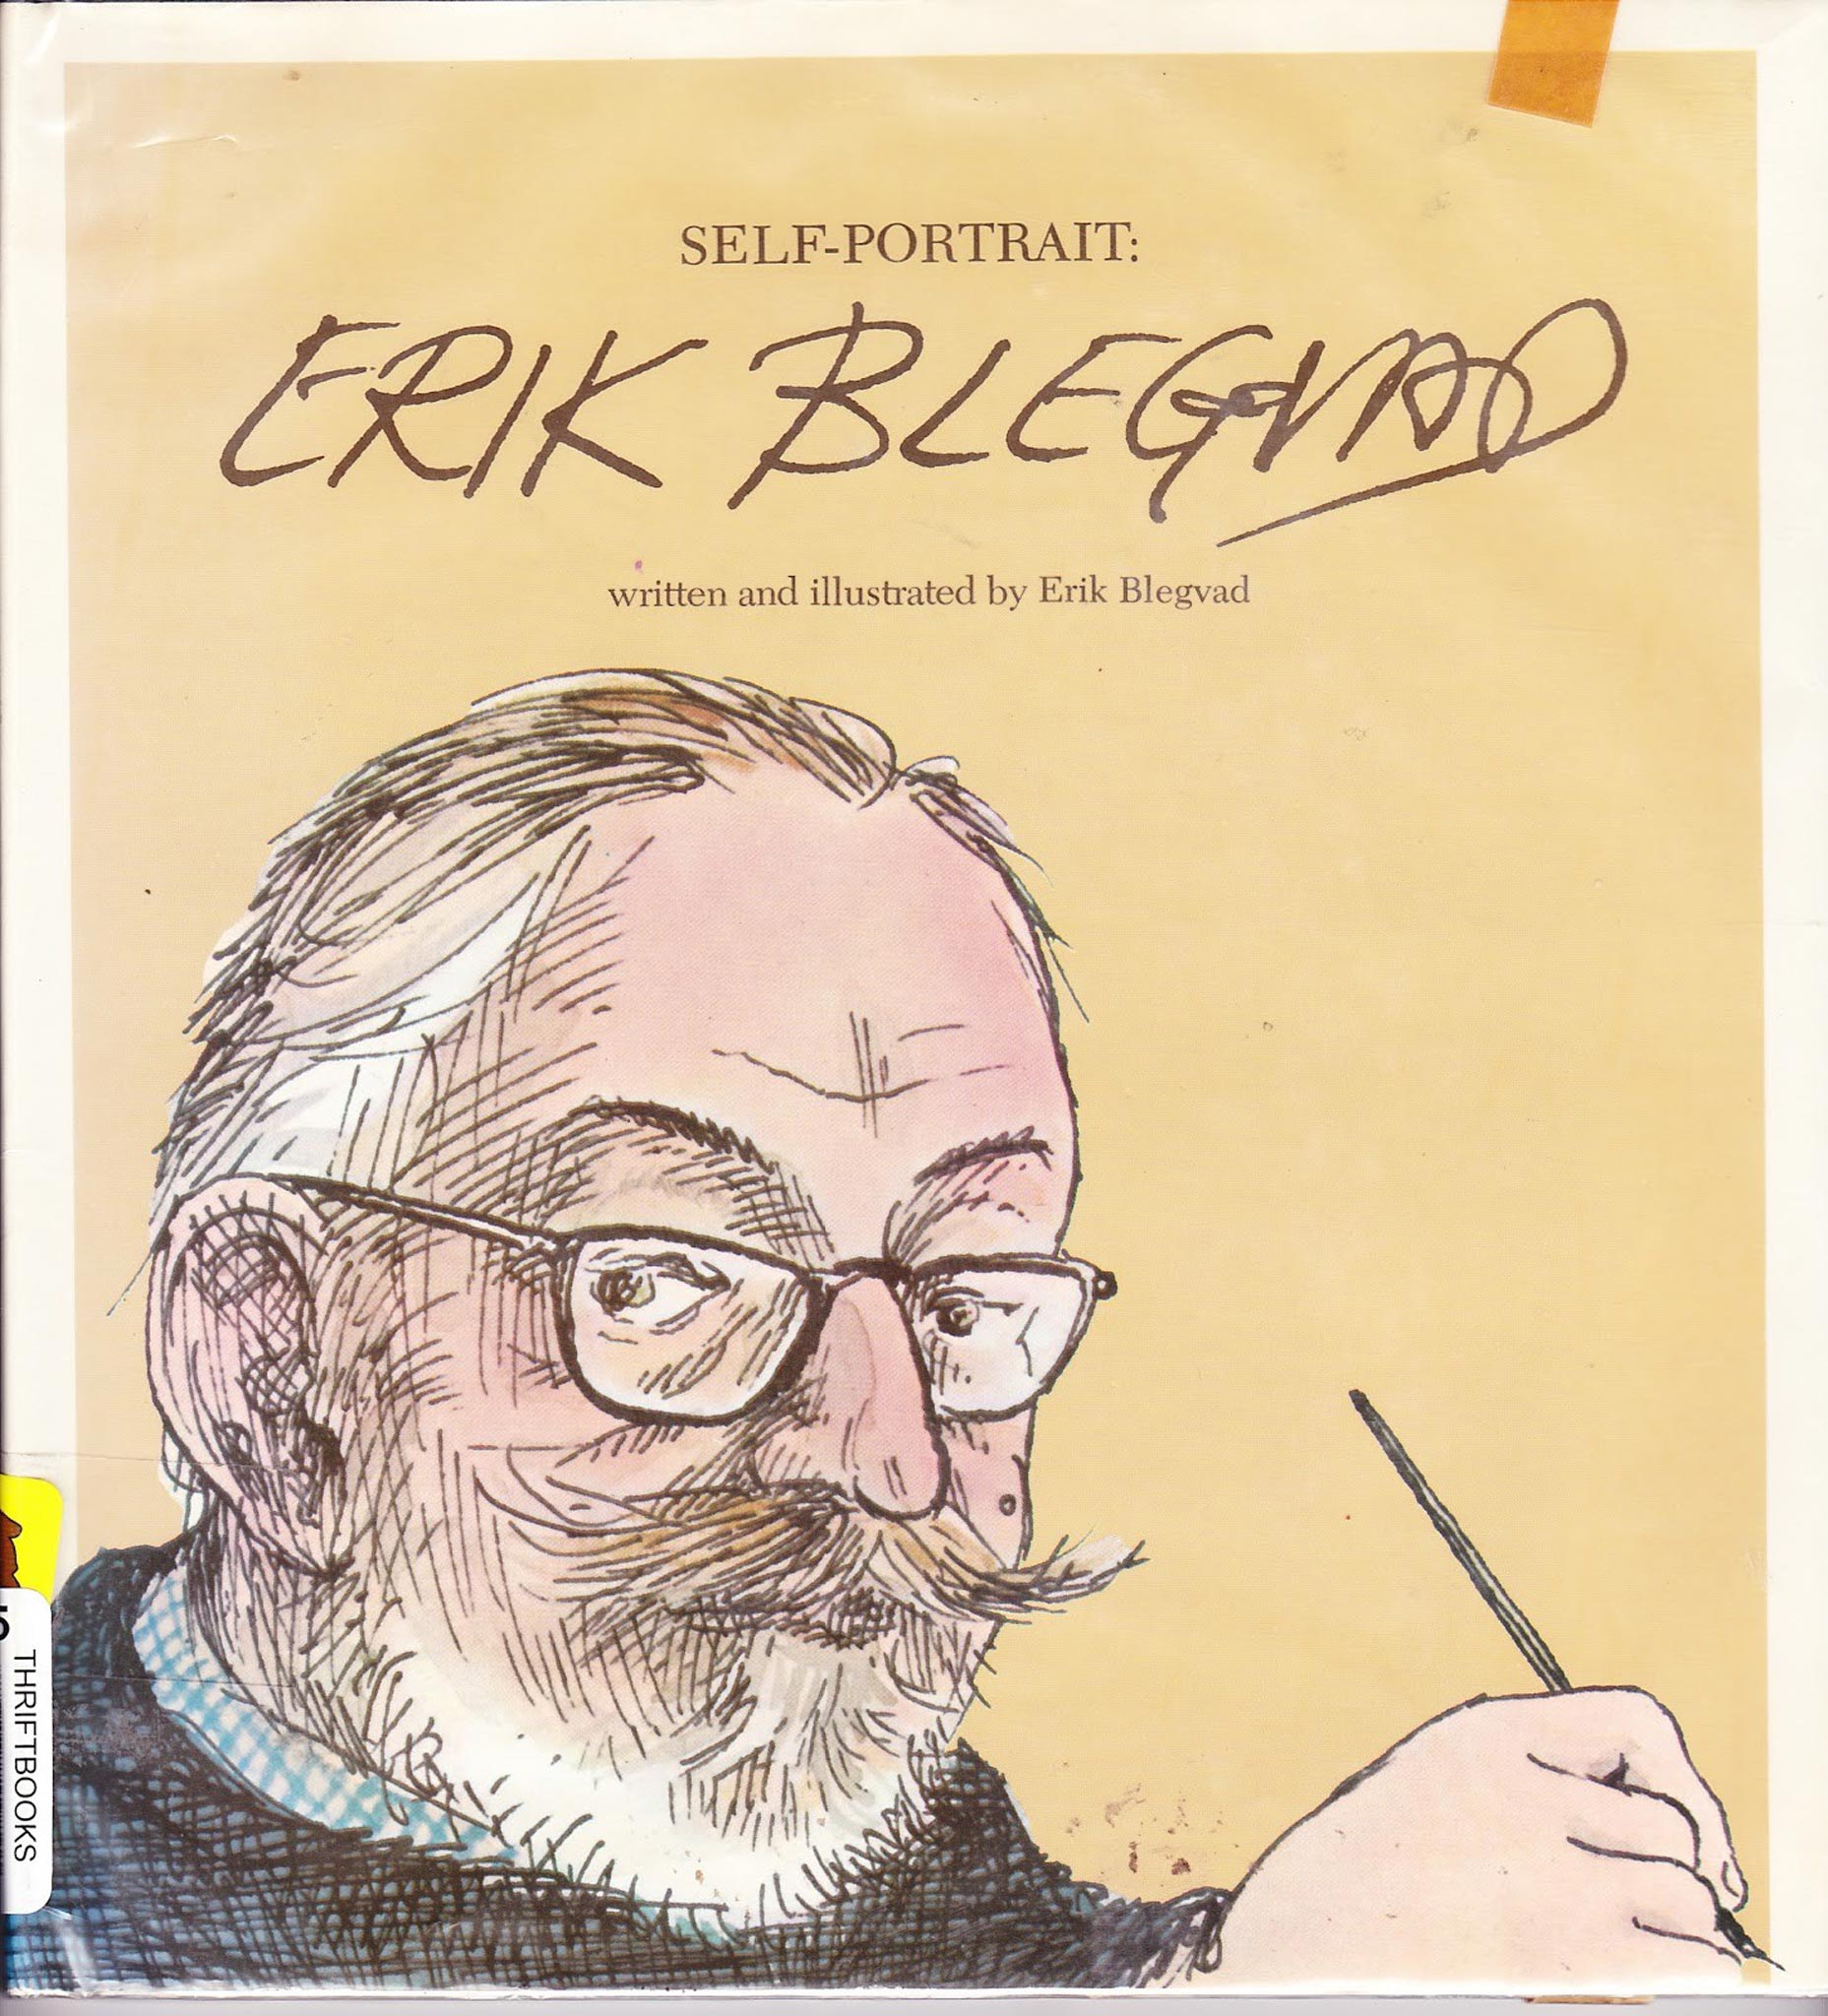 Erik Blegvad published his memoir in 1979